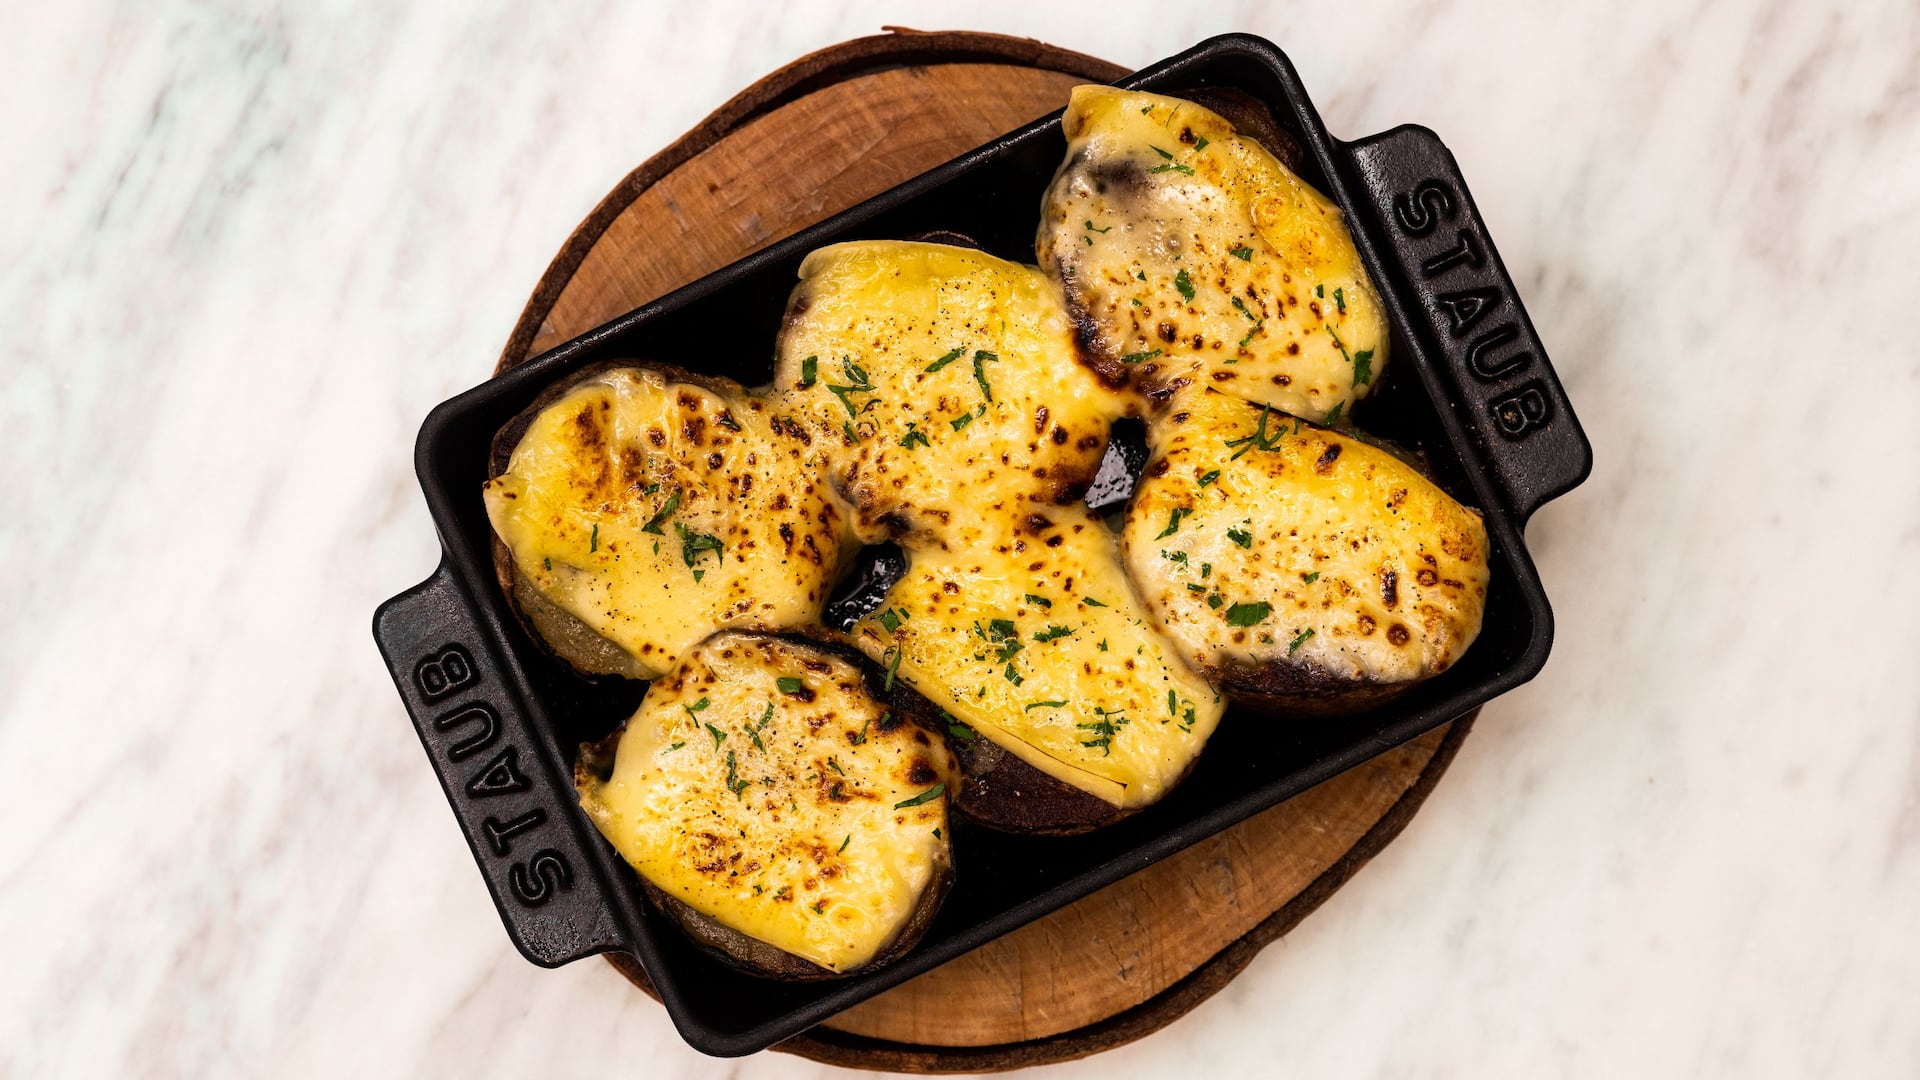 Kutchan potato raclette cheese